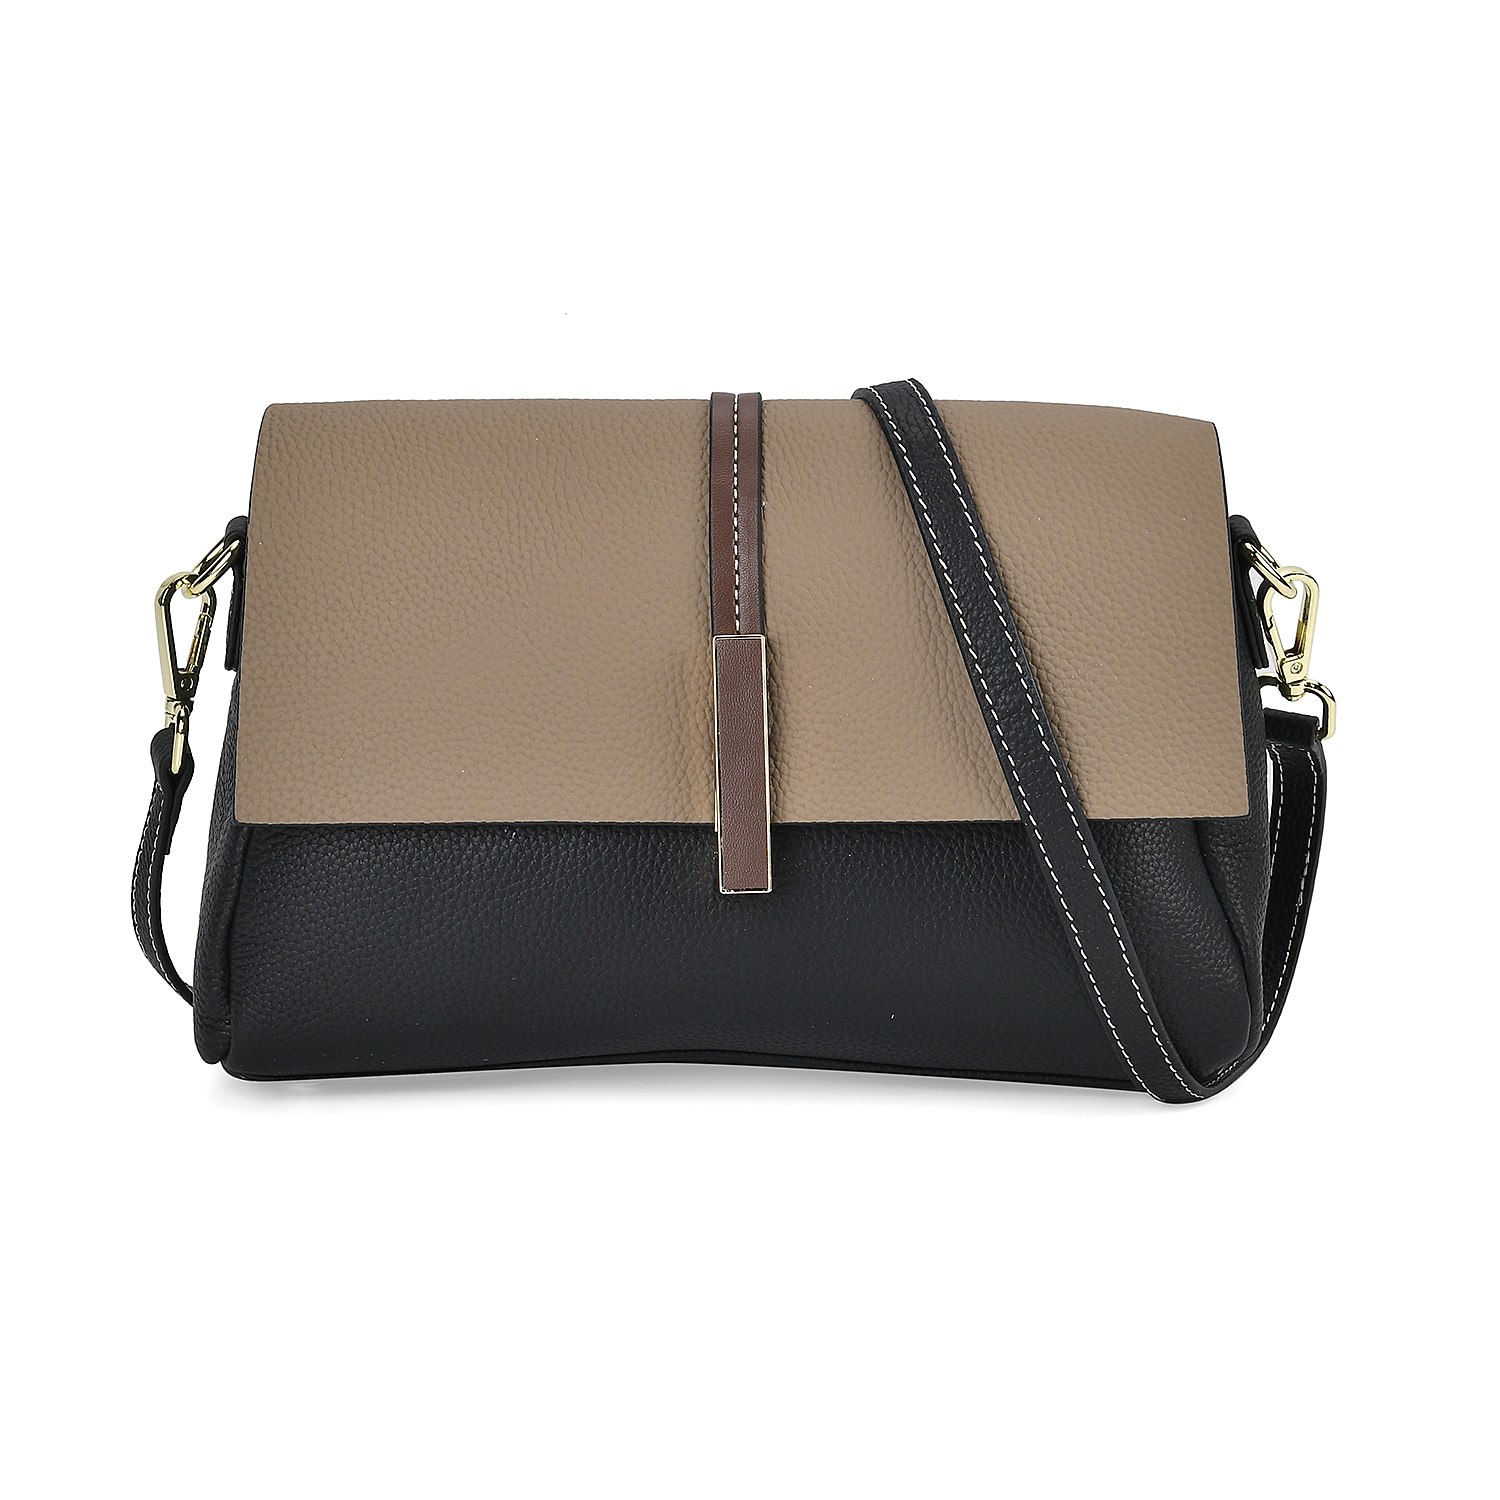 100% Genuine Leather Solid Crossbody Bag with Long Shoulder Strap - Black & Khaki